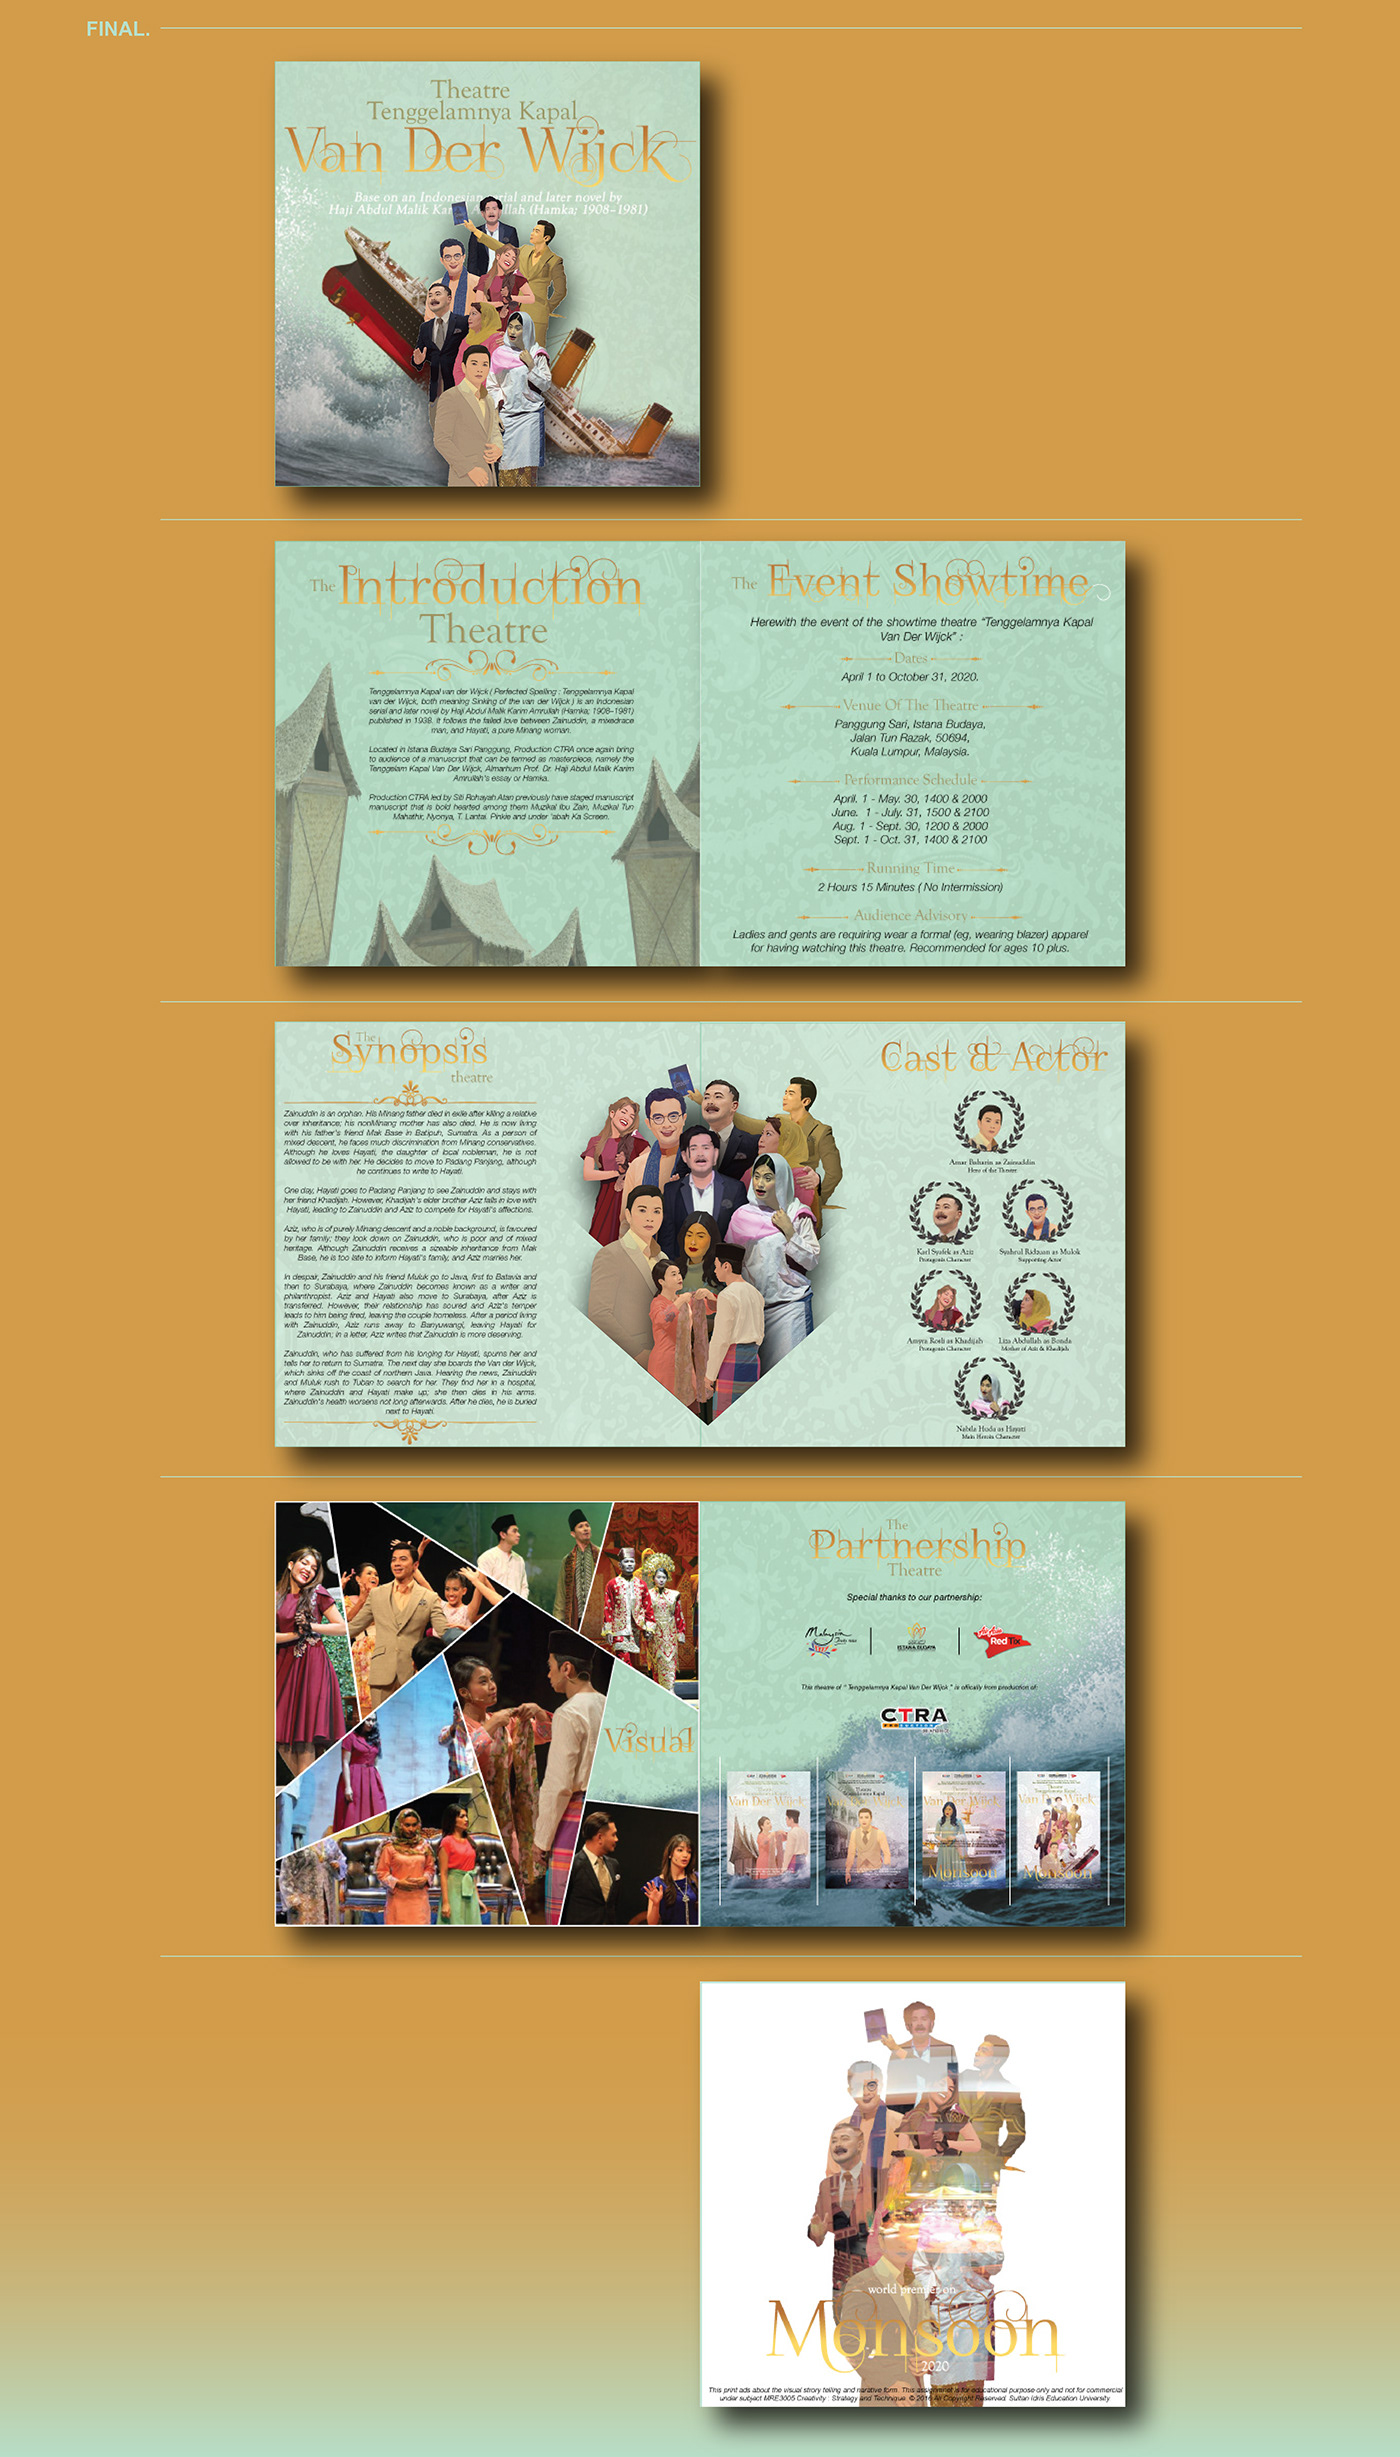 ILLUSTRATION  poster brochure Web Design  Van Der Wijck Advertising  graphic design  malaysia upsi Istana Budaya